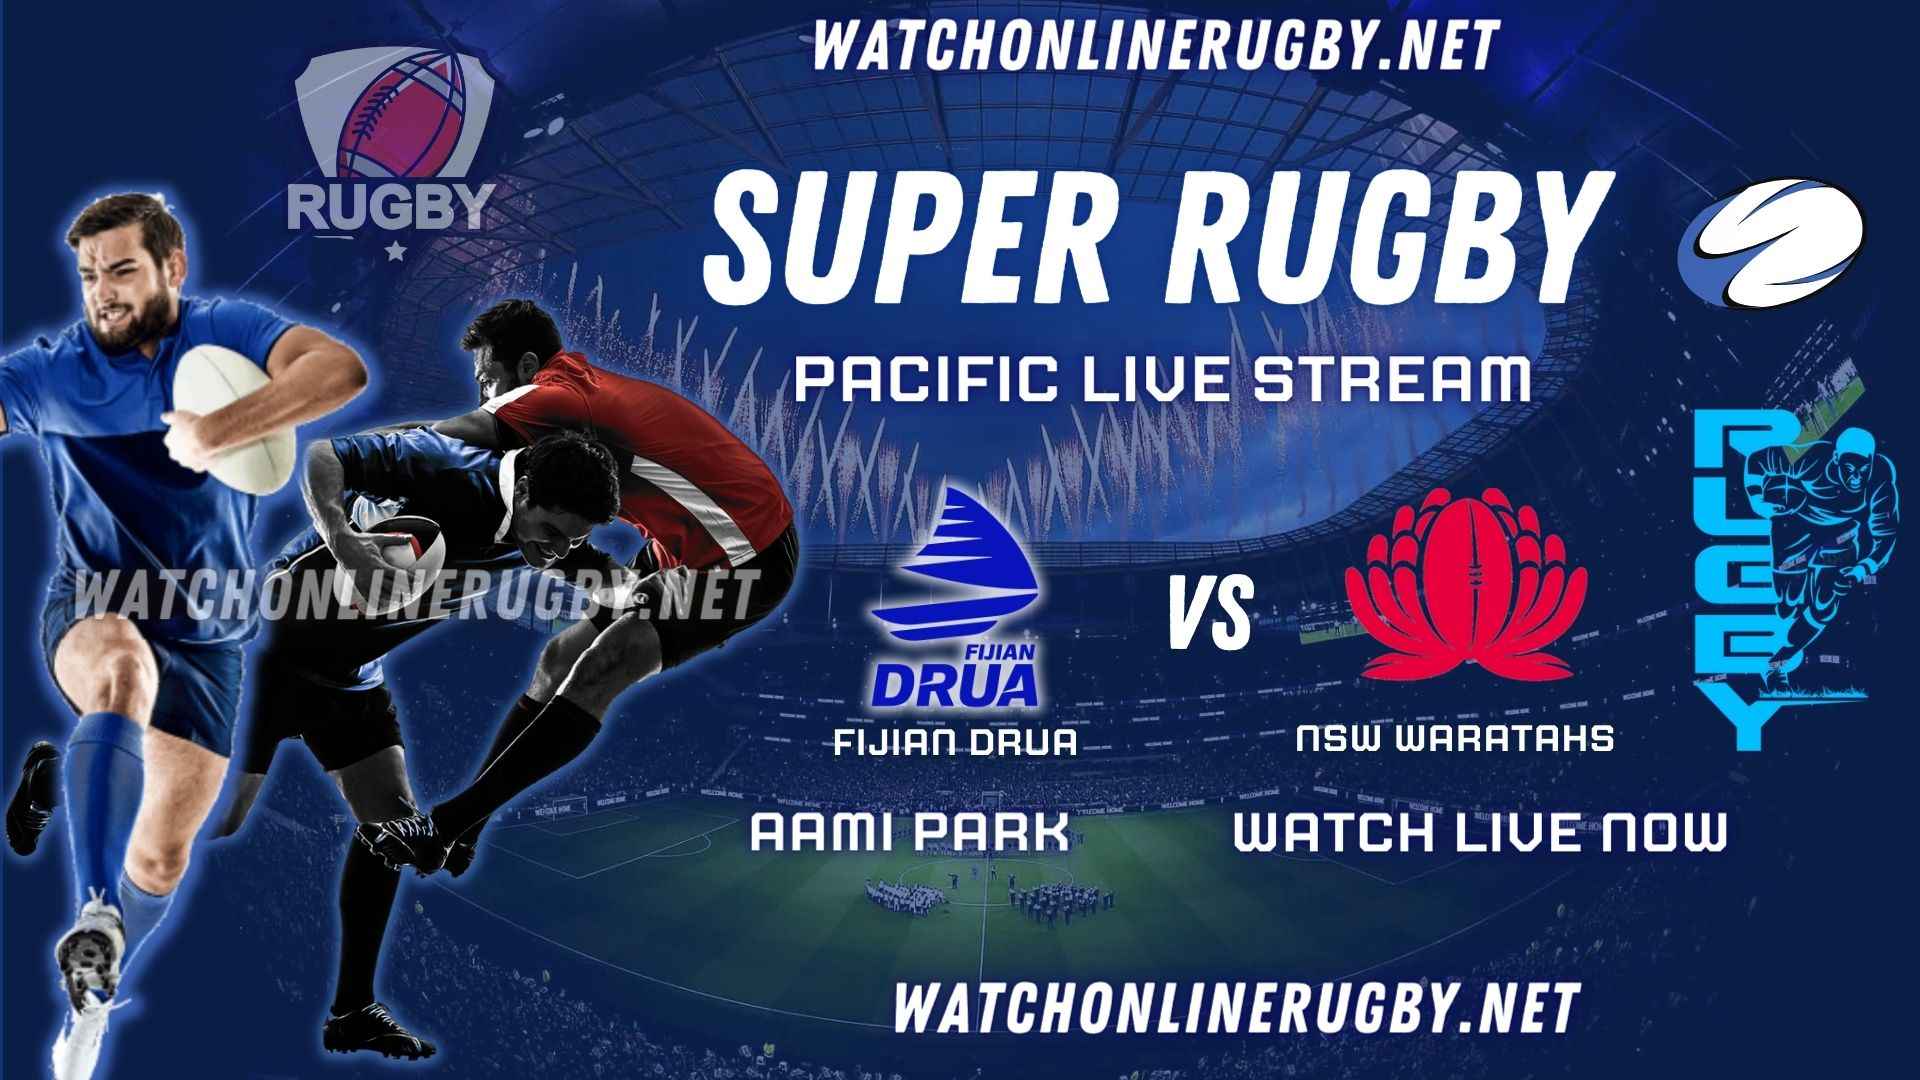 Fijian Drua vs Waratahs Rugby Live Online